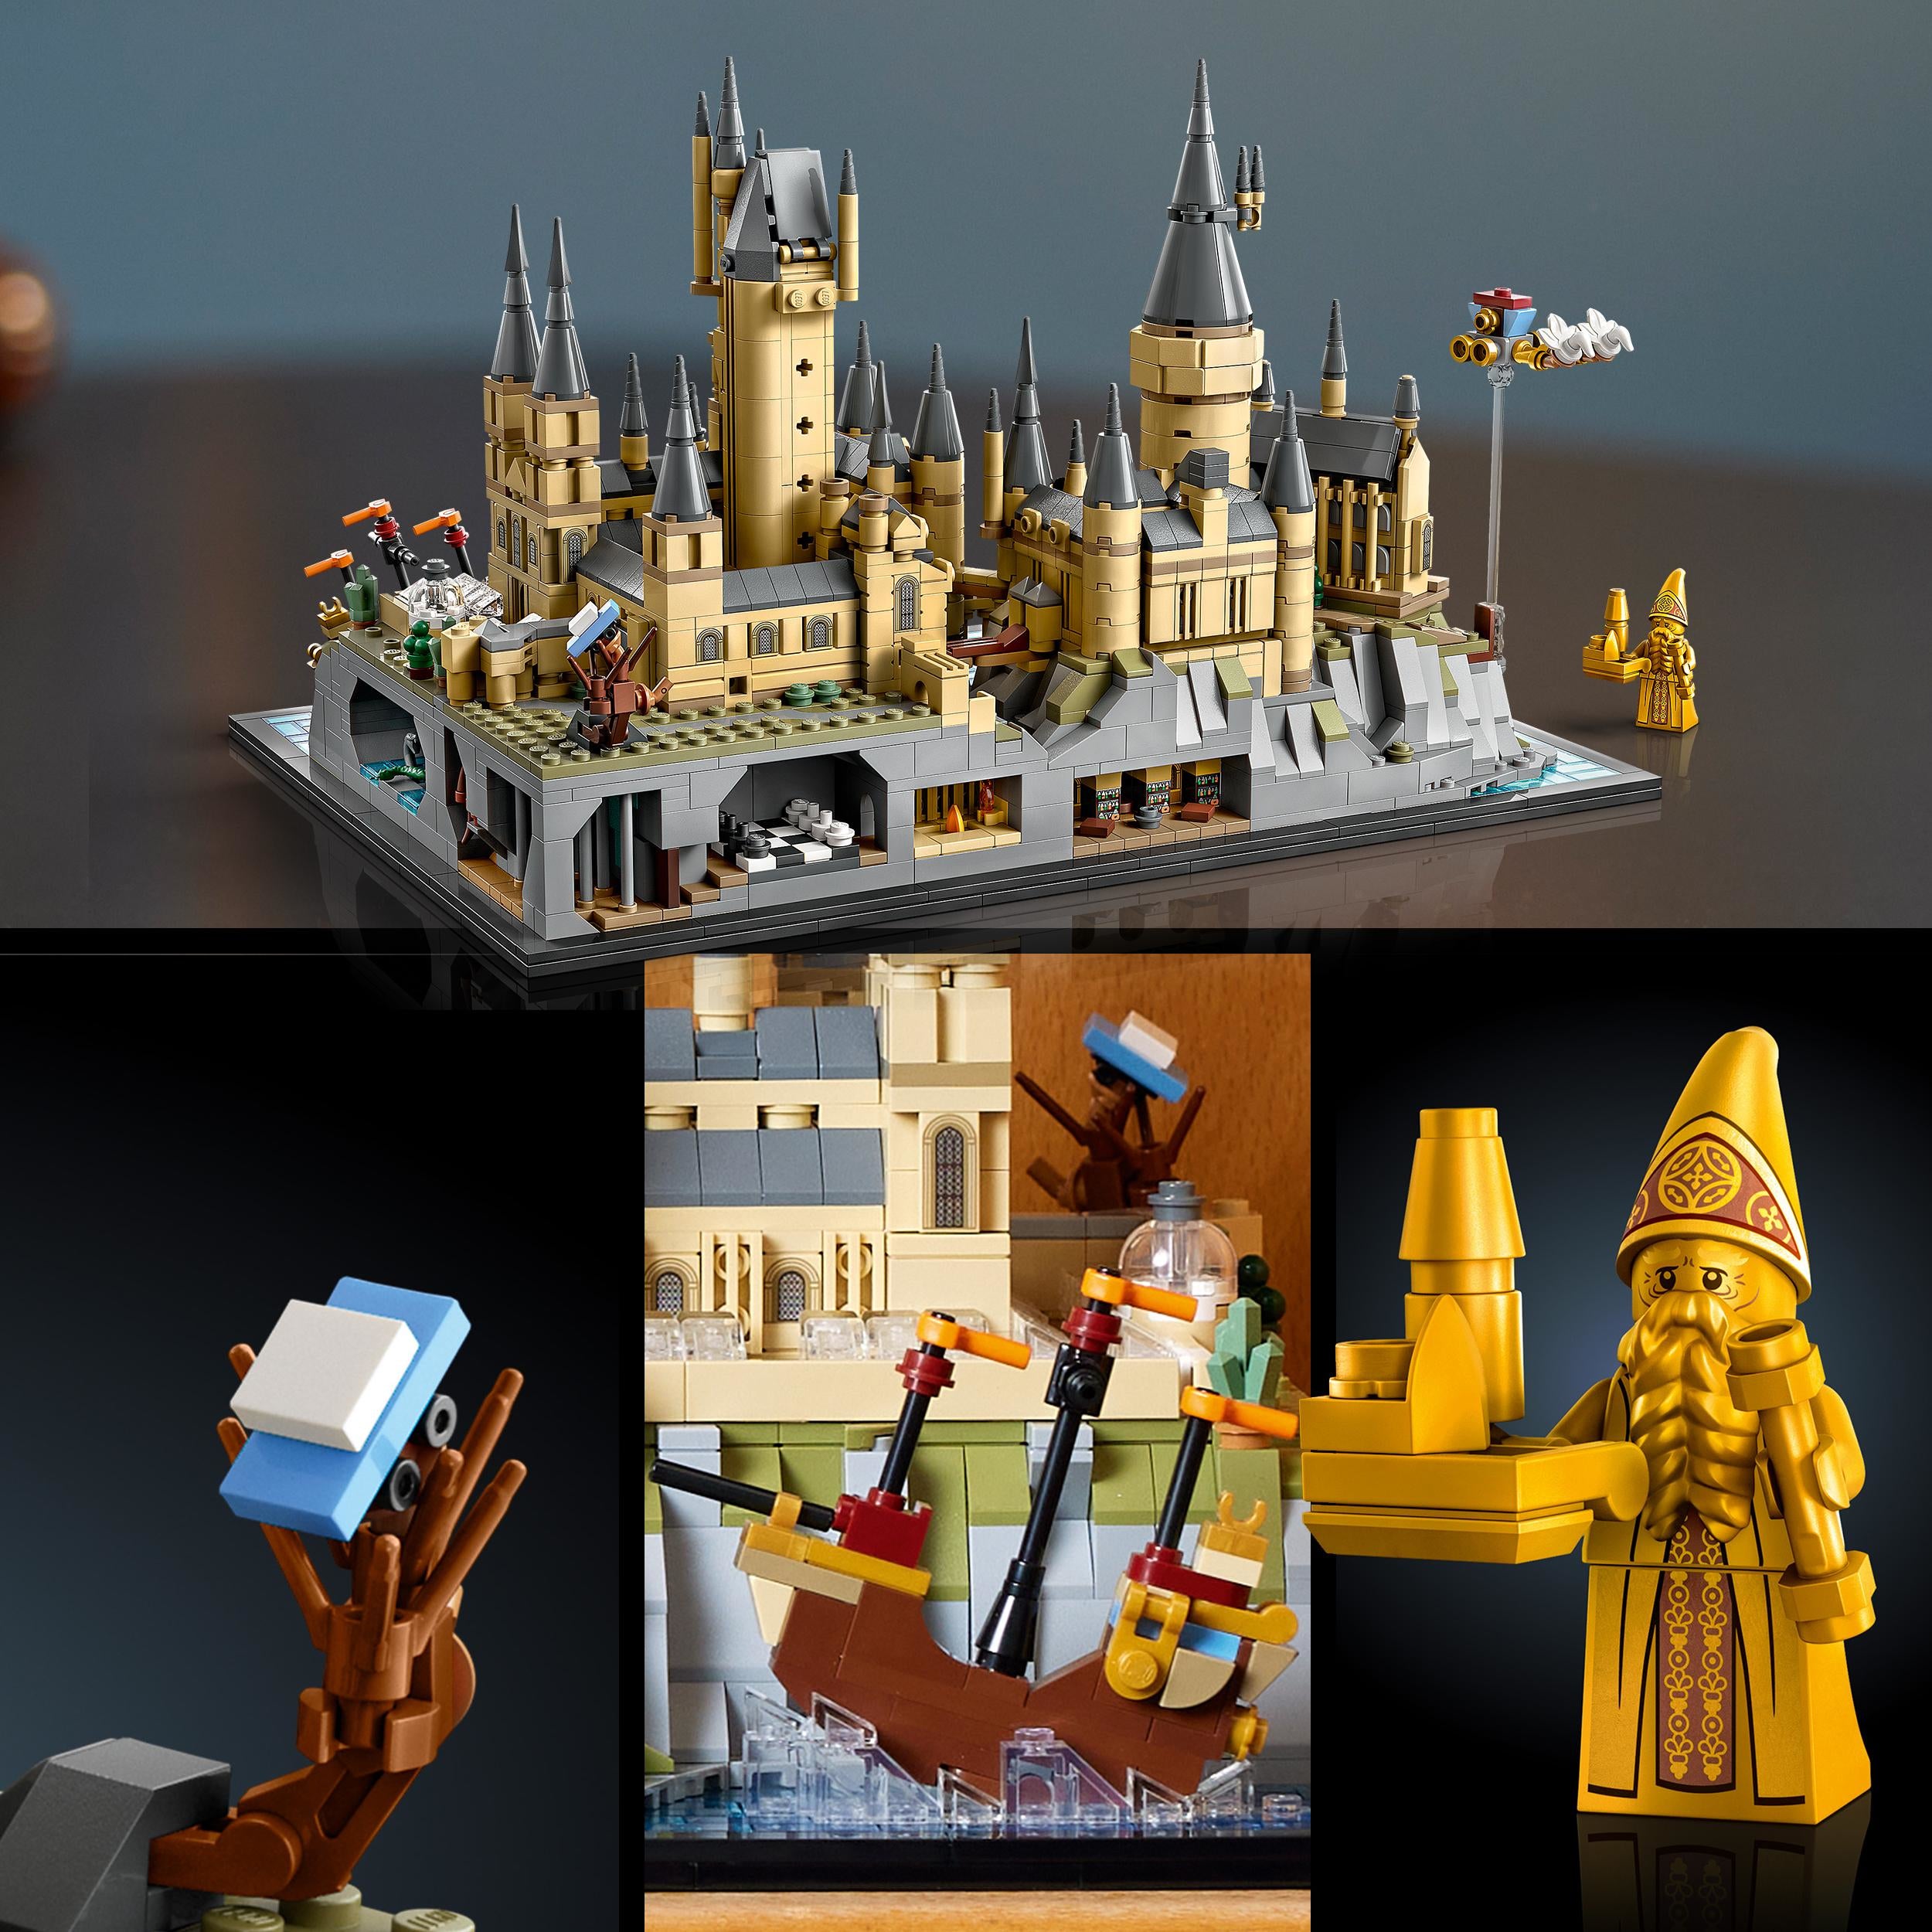 76419 LEGO Harry Potter TM Castello e parco di Hogwarts